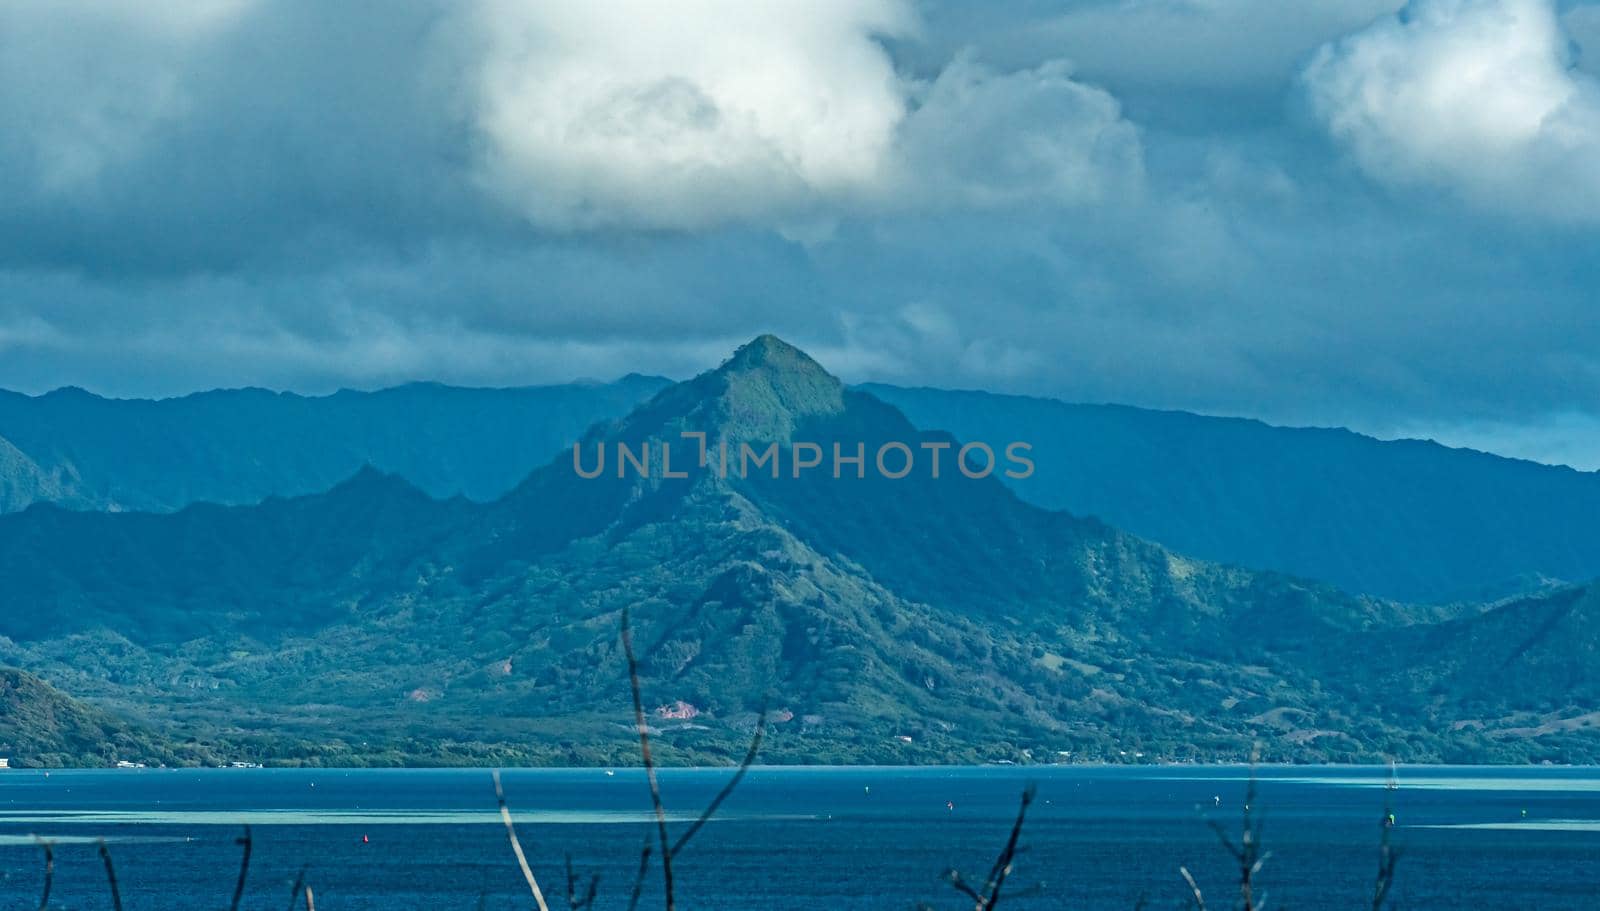 east view of oahu hawaii by digidreamgrafix